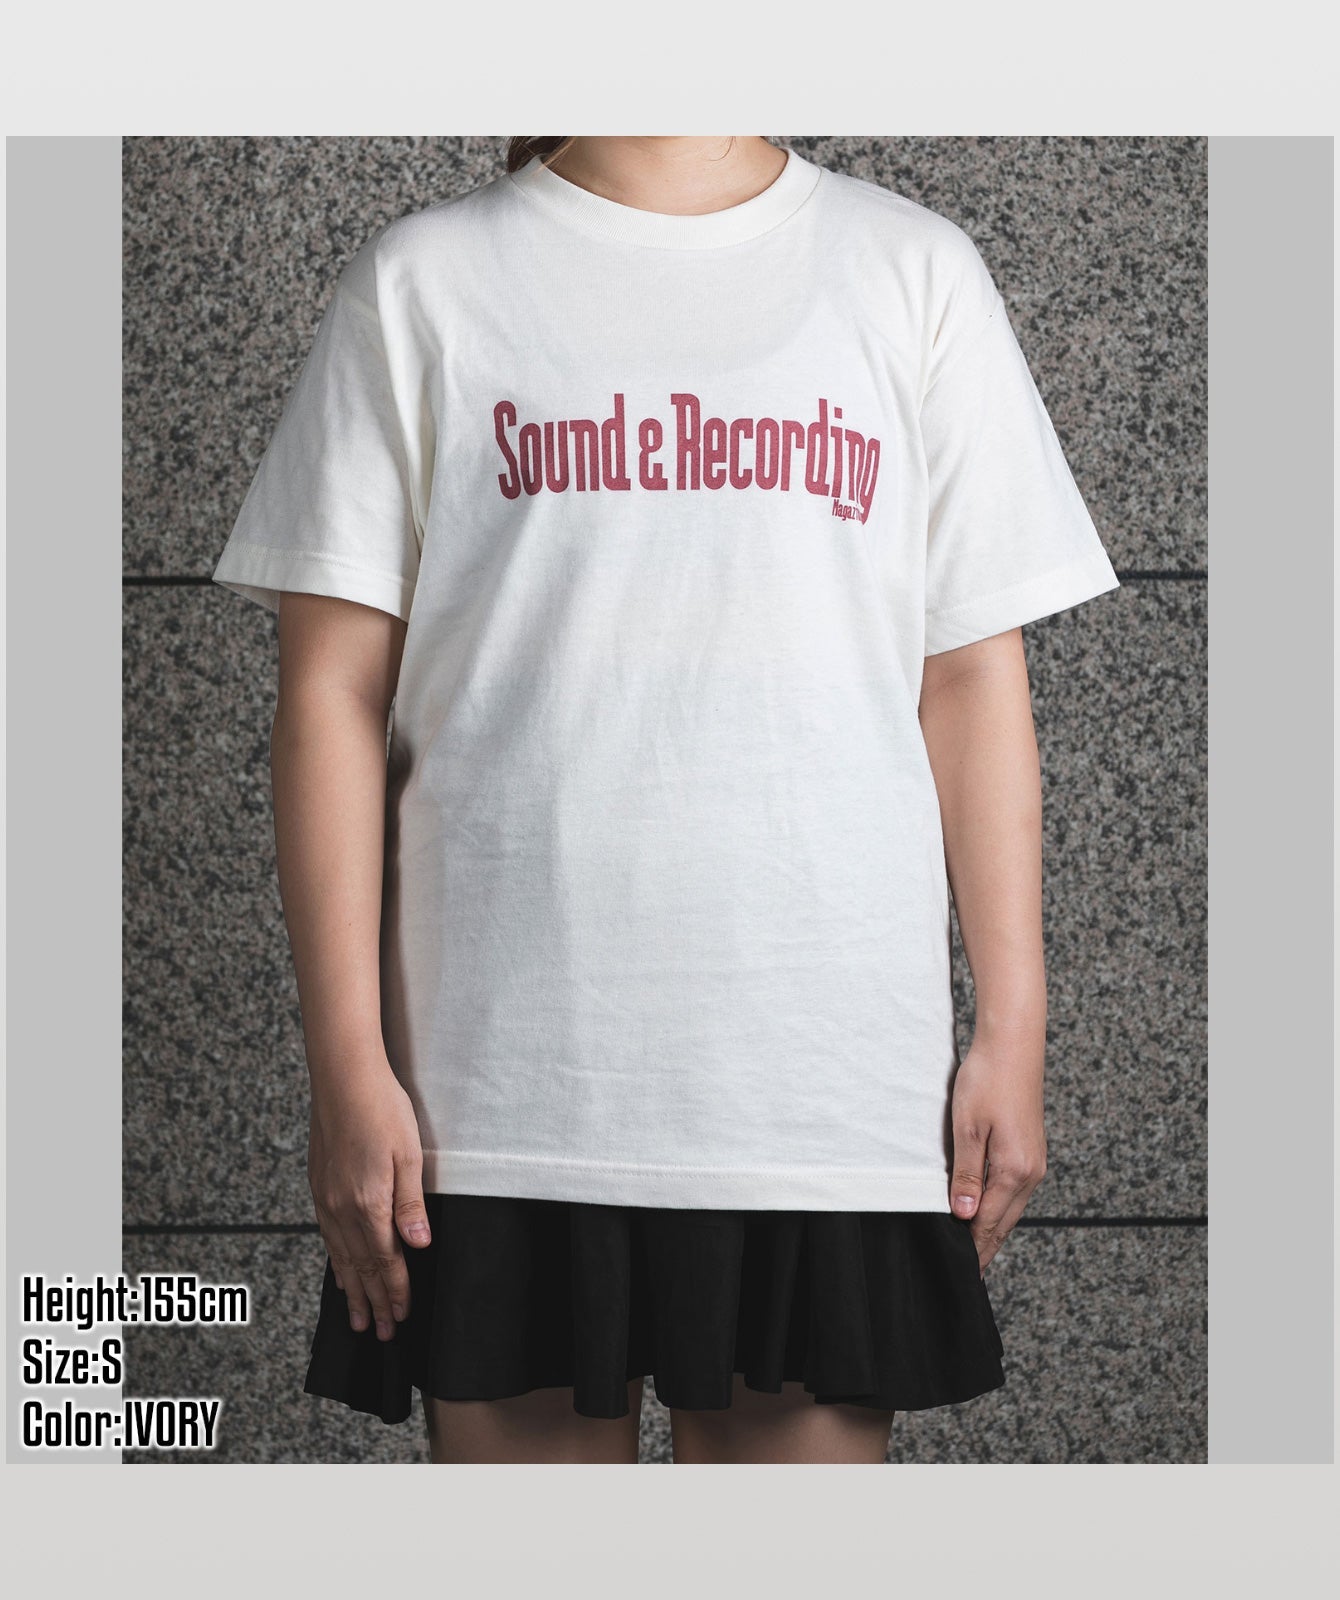 Sound & Recording Magazine オリジナルロゴ ブラック×ピンク・ロゴ